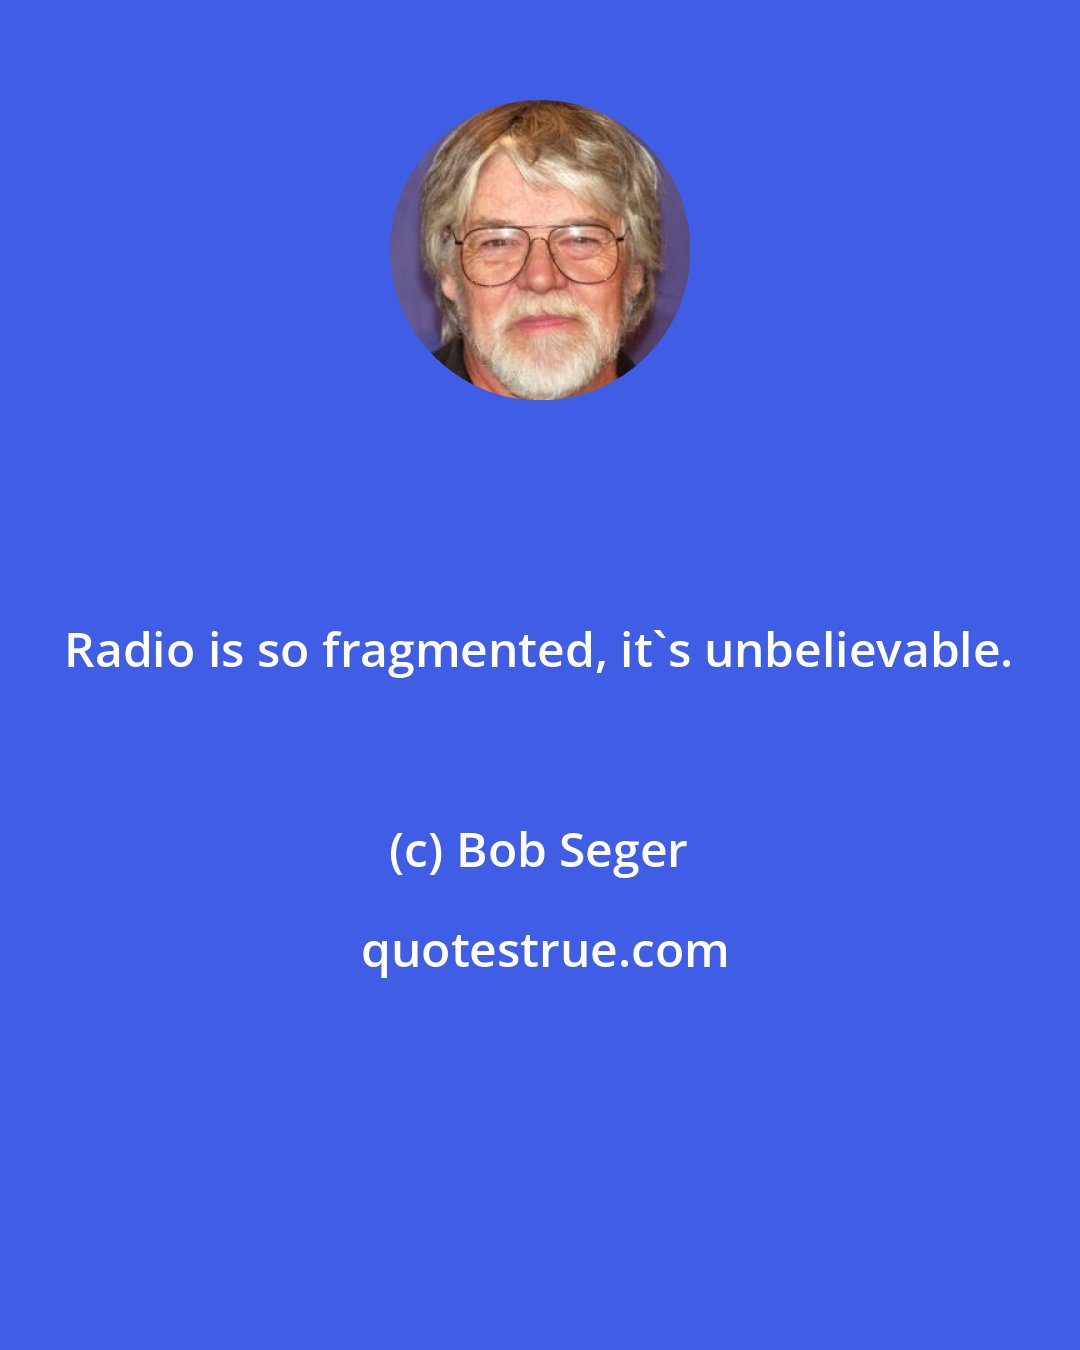 Bob Seger: Radio is so fragmented, it's unbelievable.